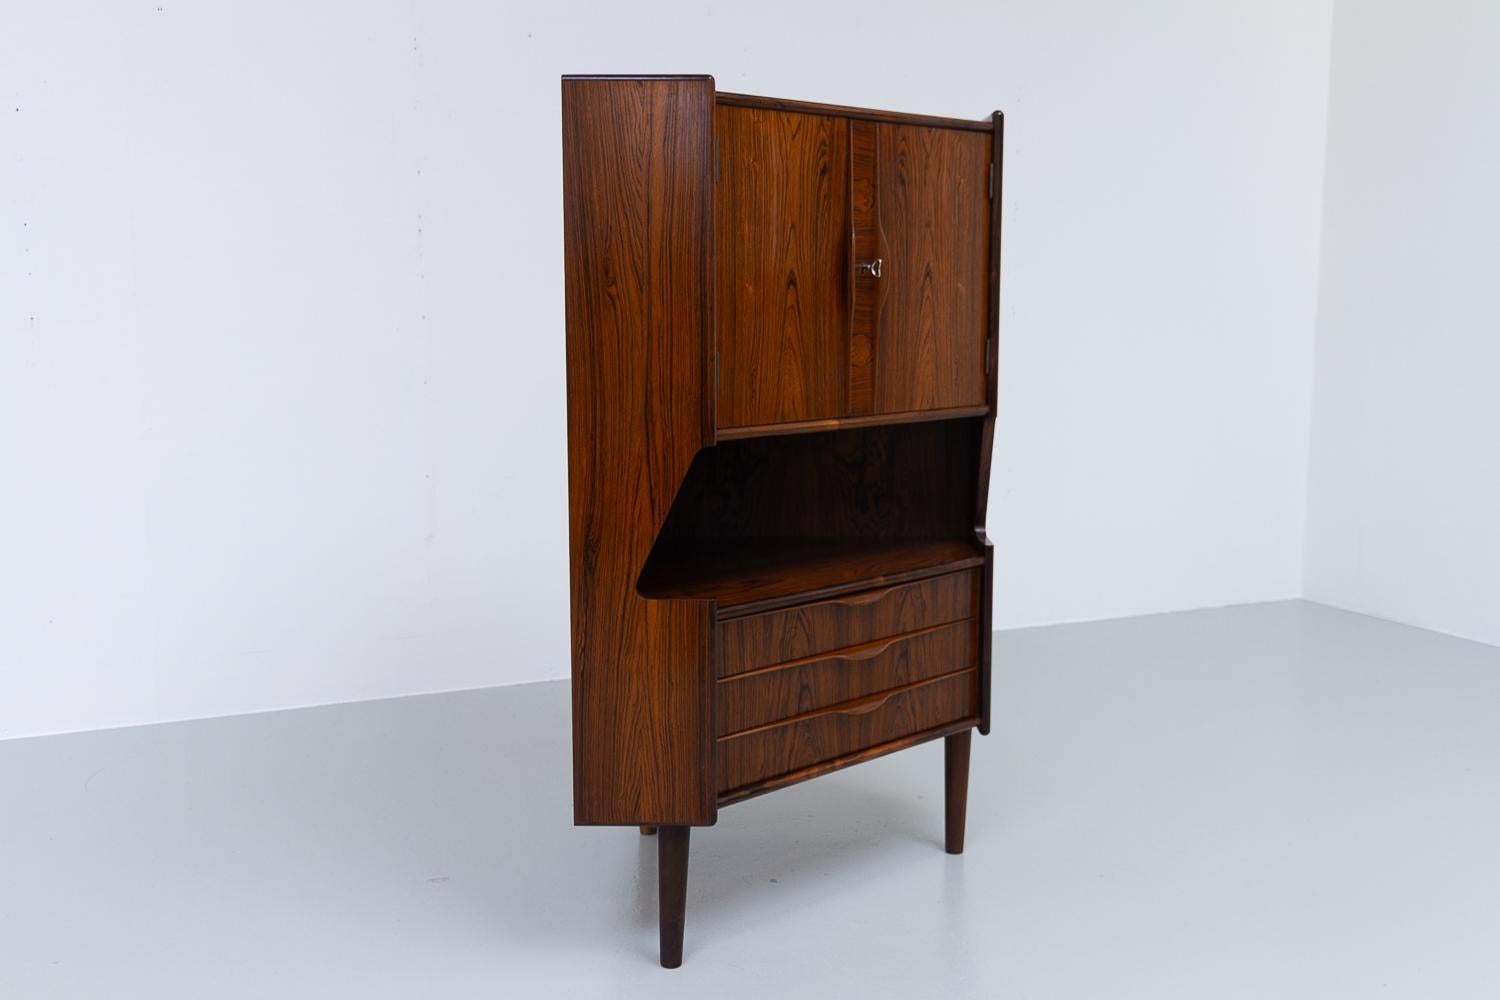 Scandinavian Modern Vintage Danish Rosewood Corner Cabinet with Dry Bar, 1960s.